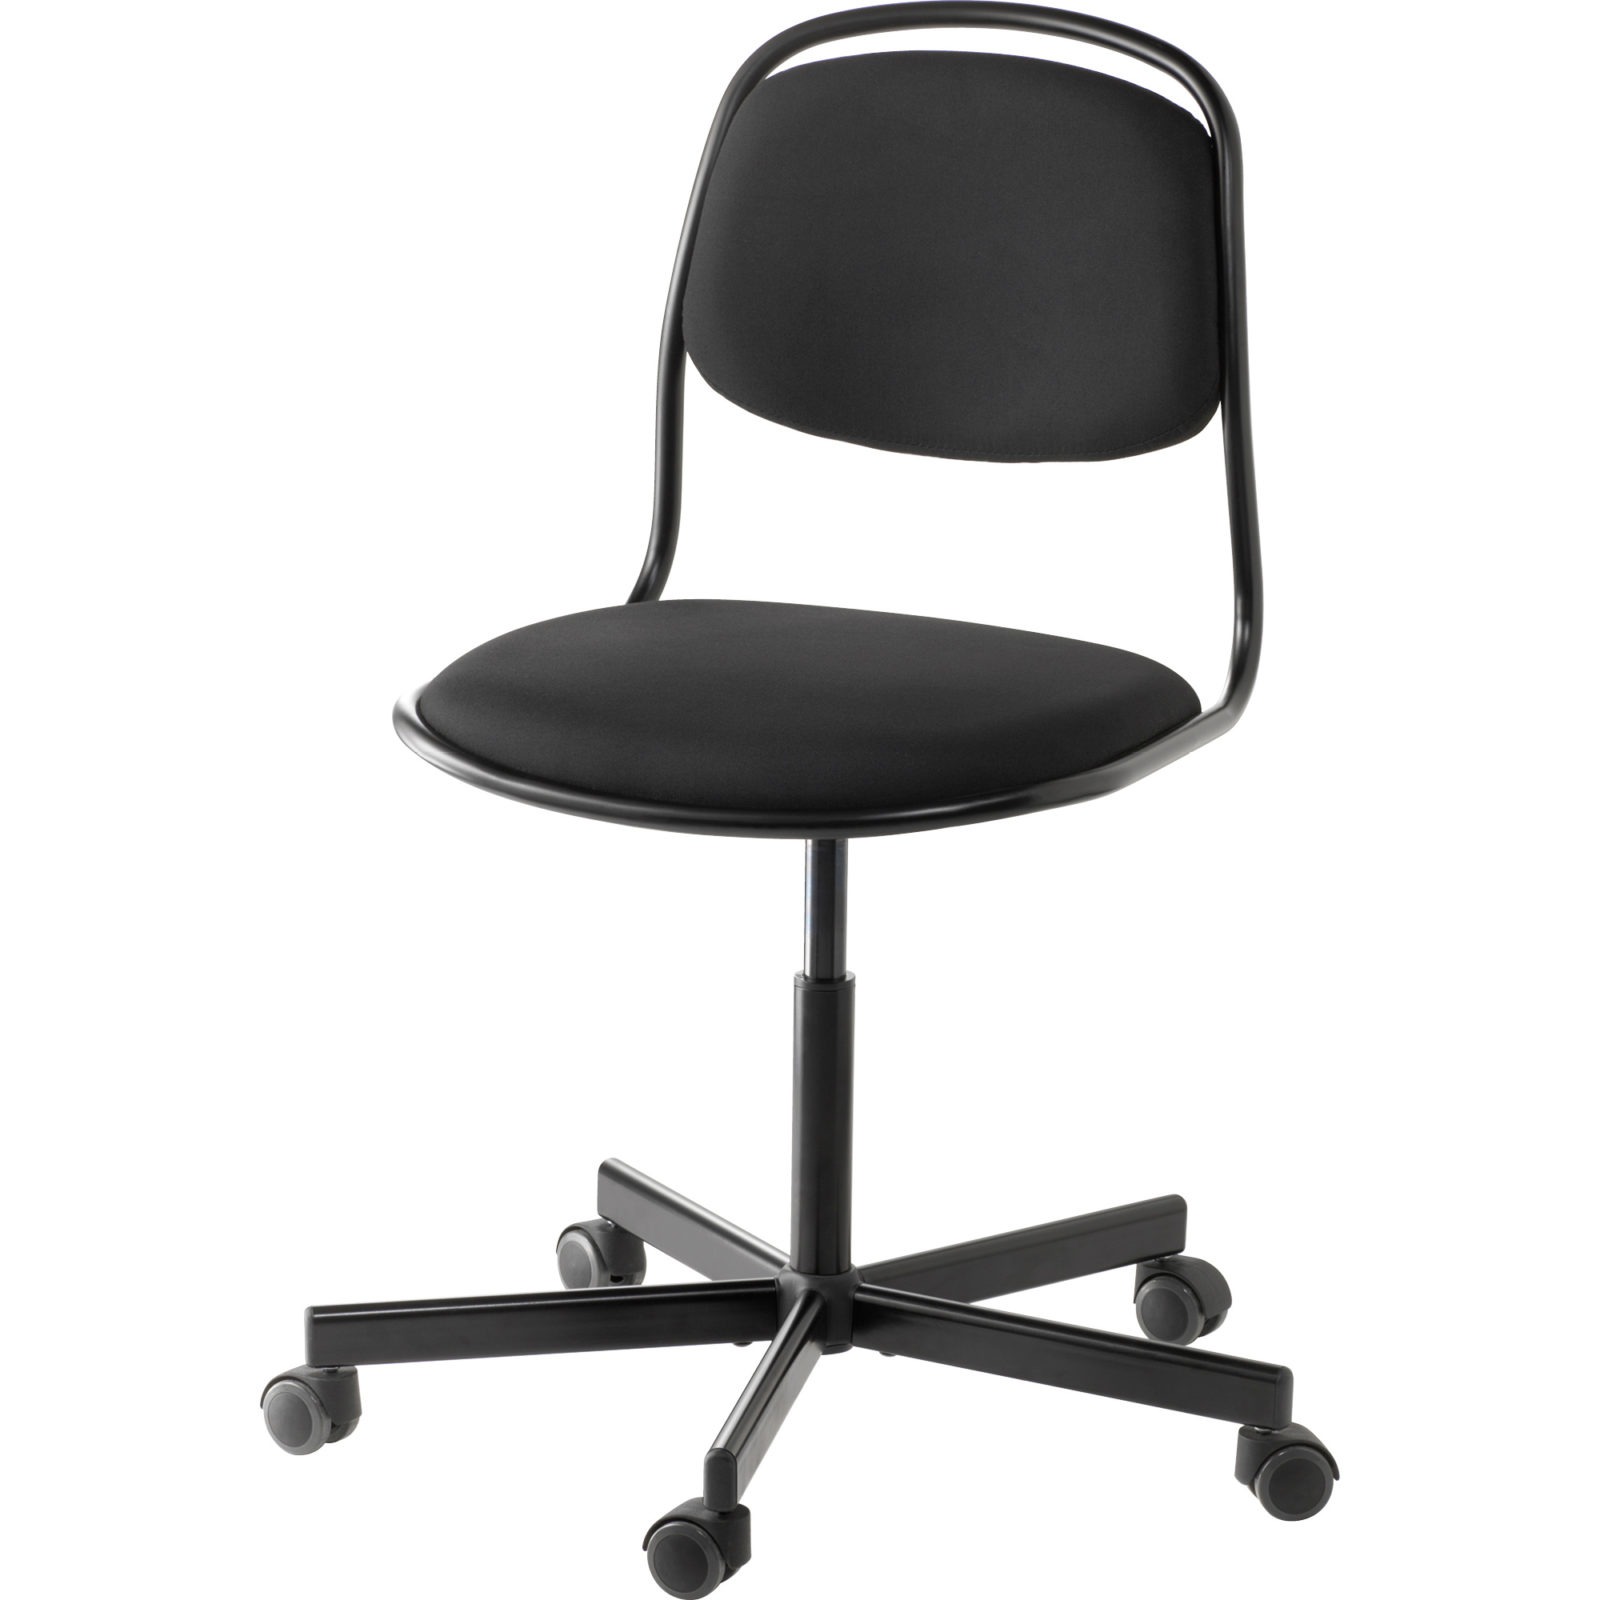 Basic black office swivel chair, ÖRFJÄLL.